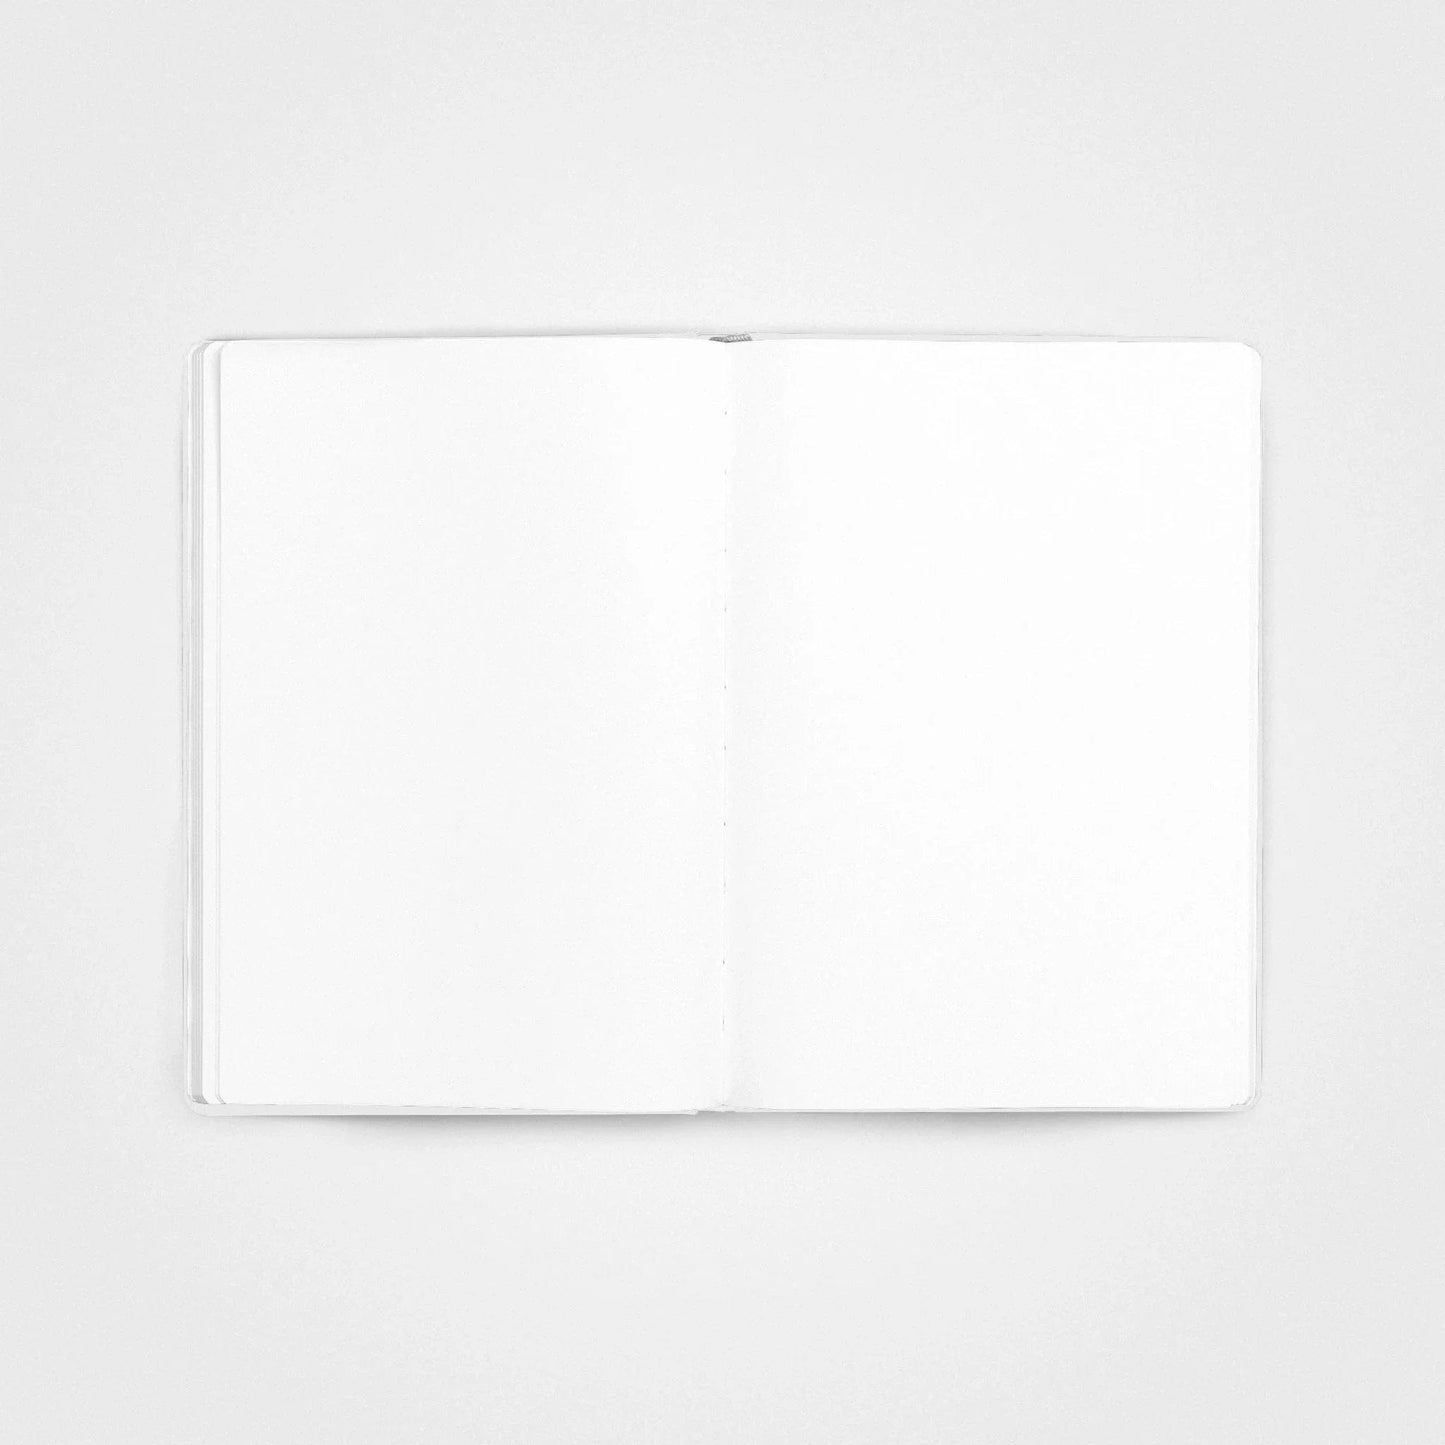 Steinpapier-Notizbuch – A5 Hardcover, Nikolay Storm | Tie-Dye